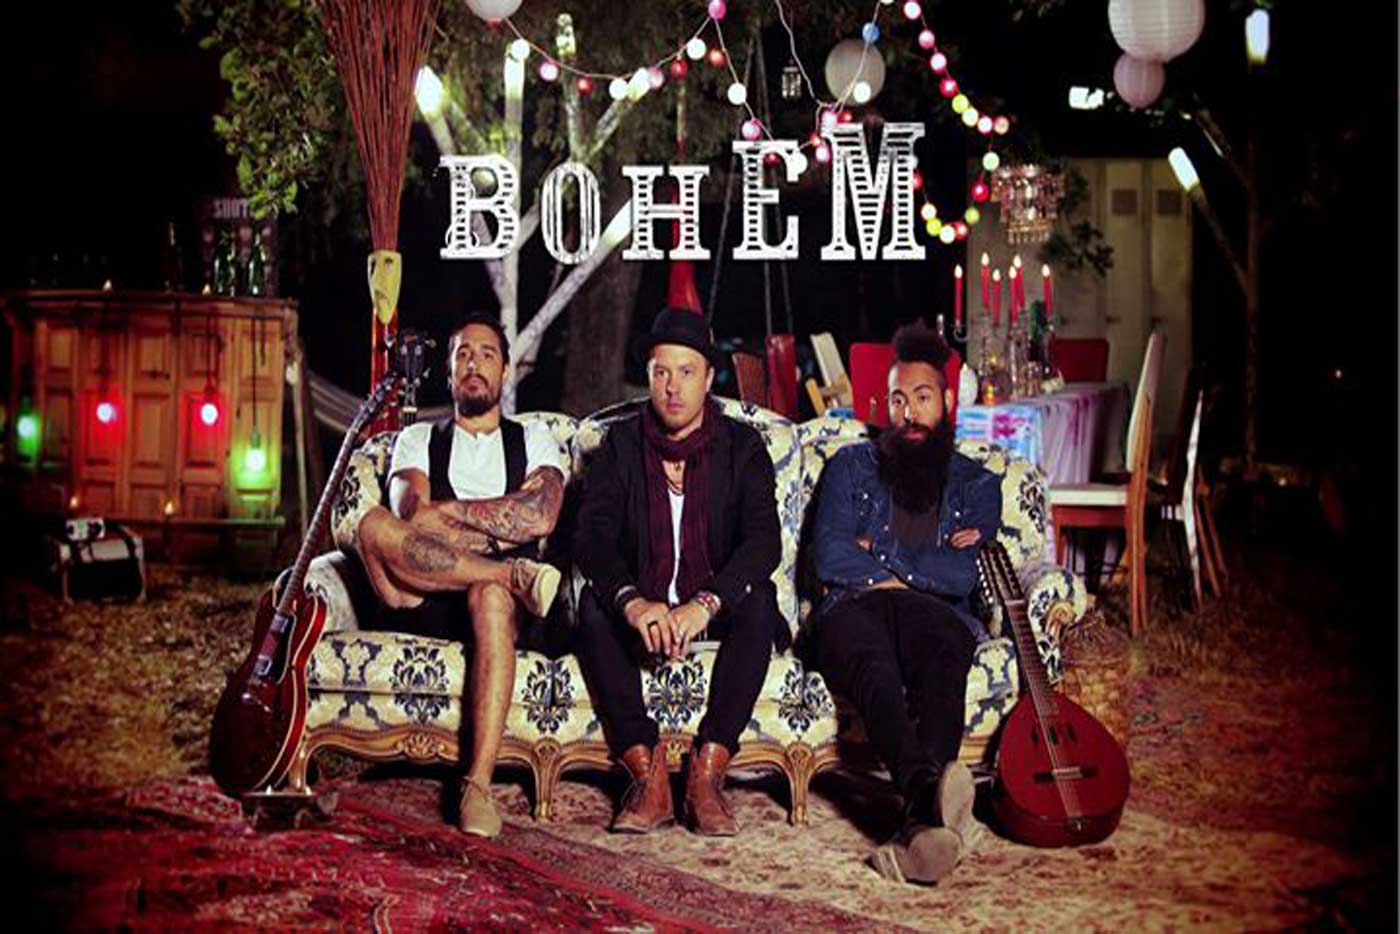 Bohem girarán por España en mayo presentando su debut